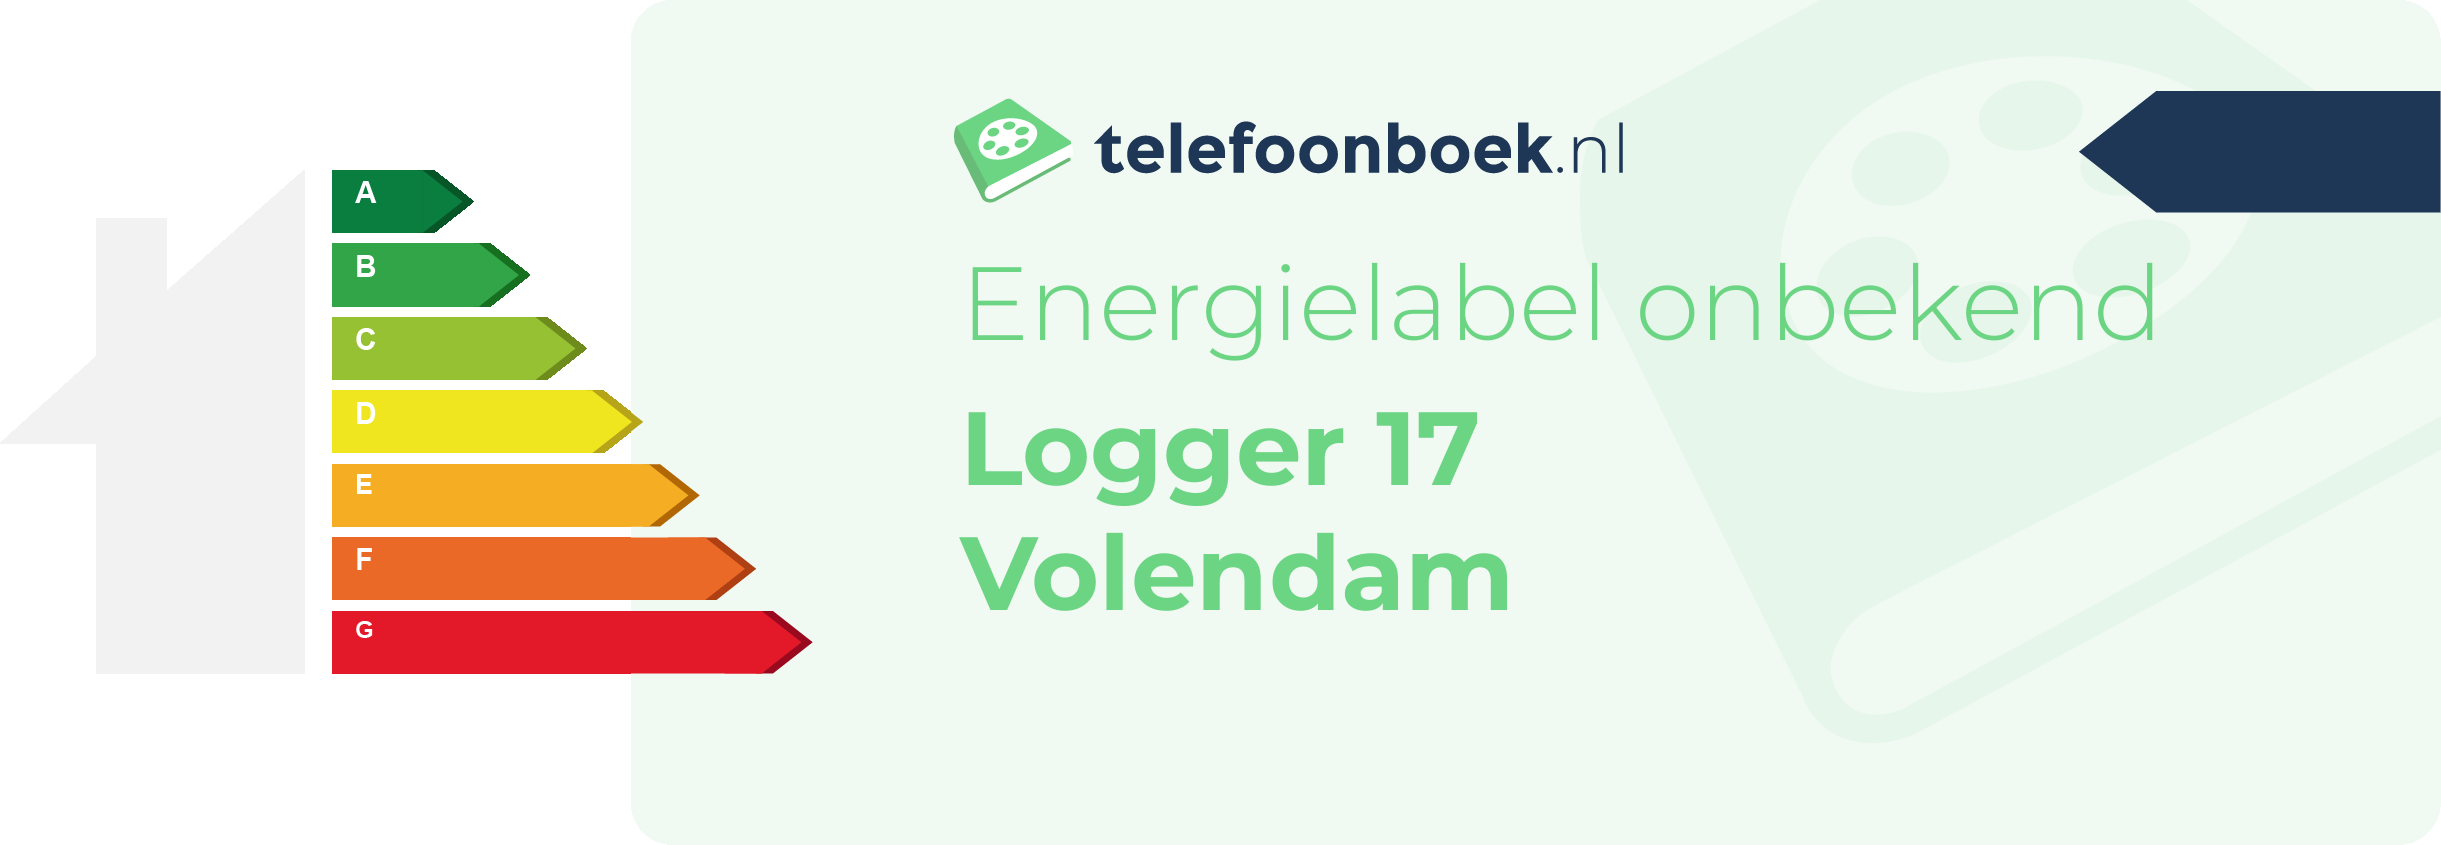 Energielabel Logger 17 Volendam